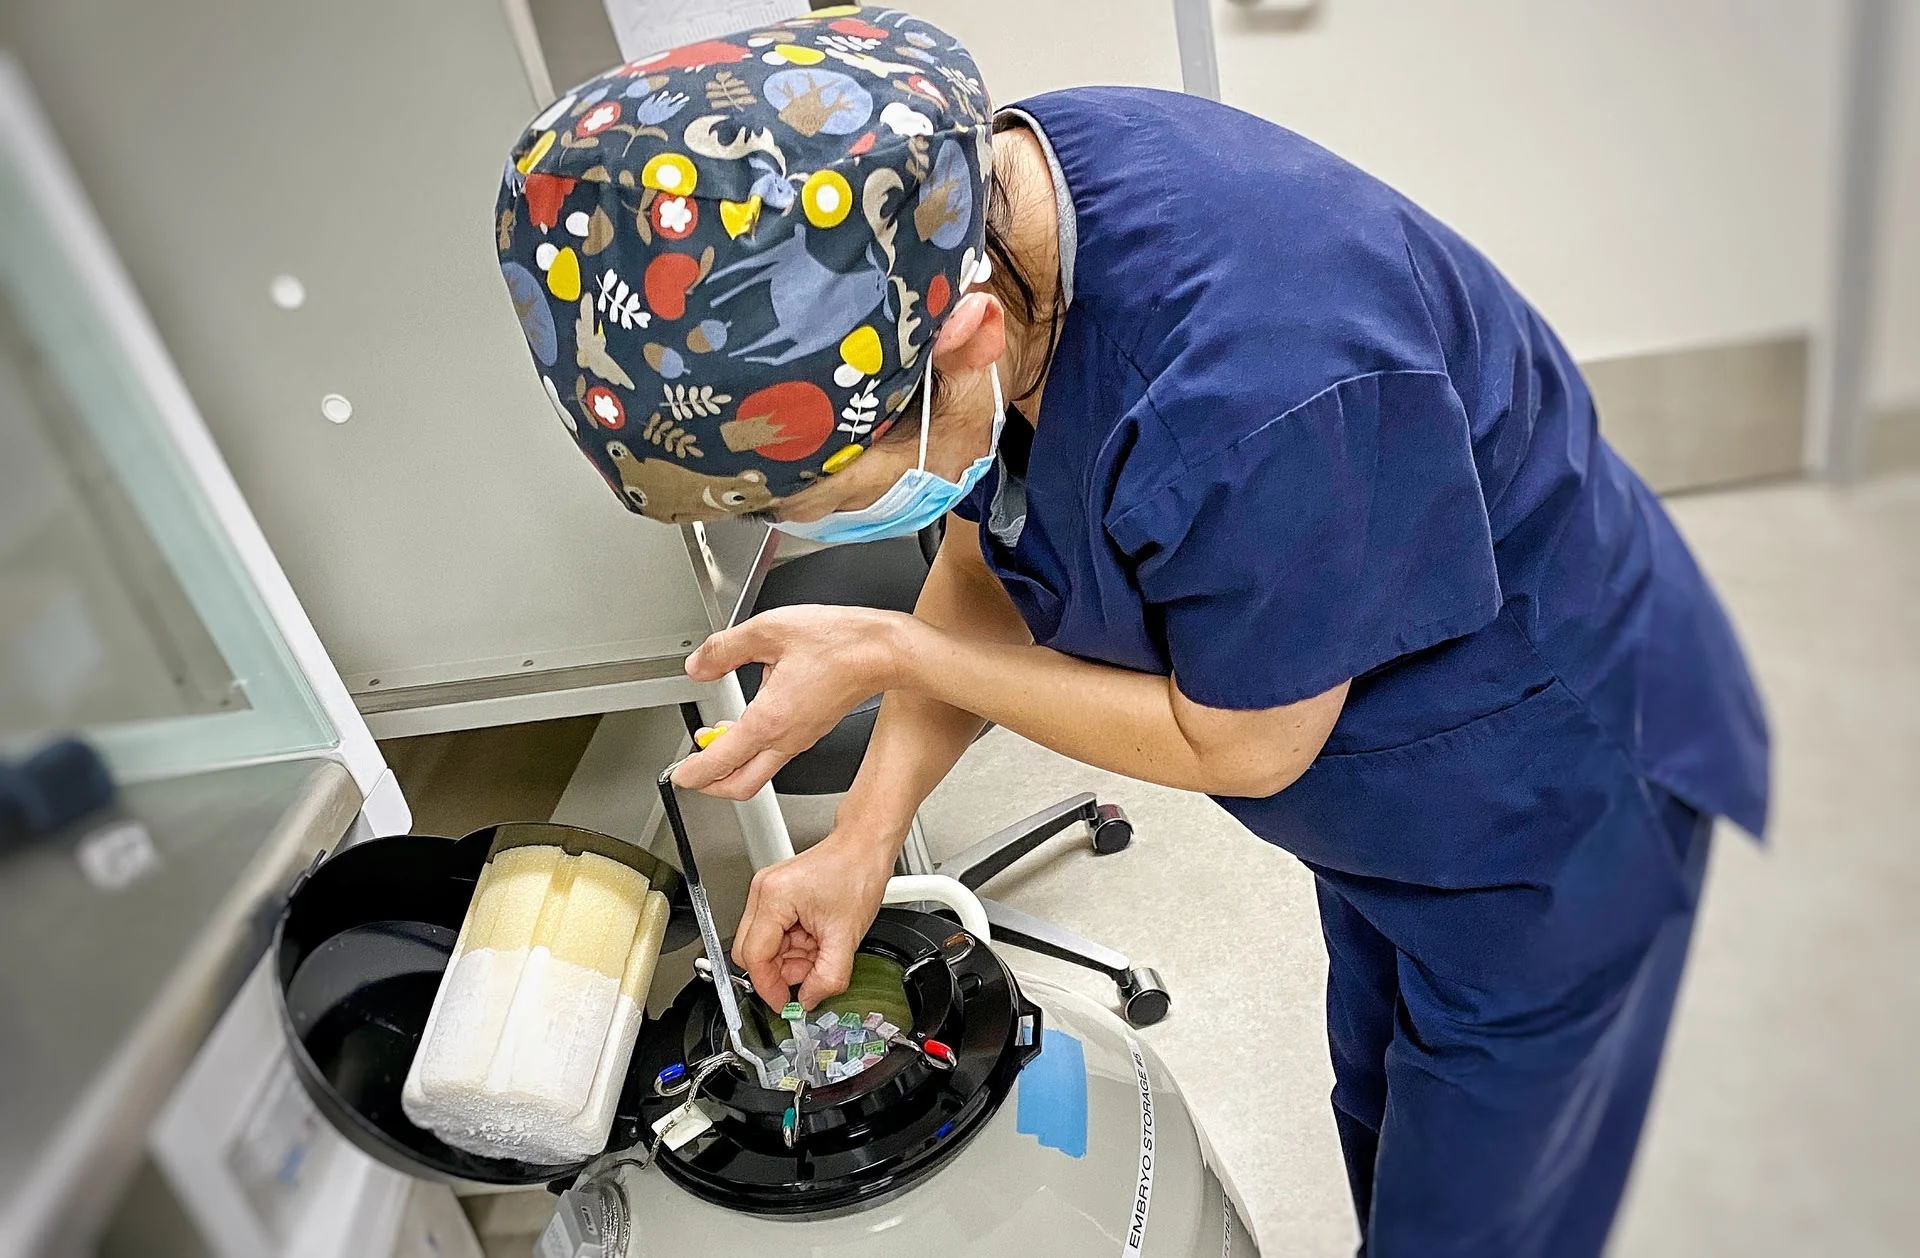 Embryologist taking tube from liquid nitrogen cryogenic tank.